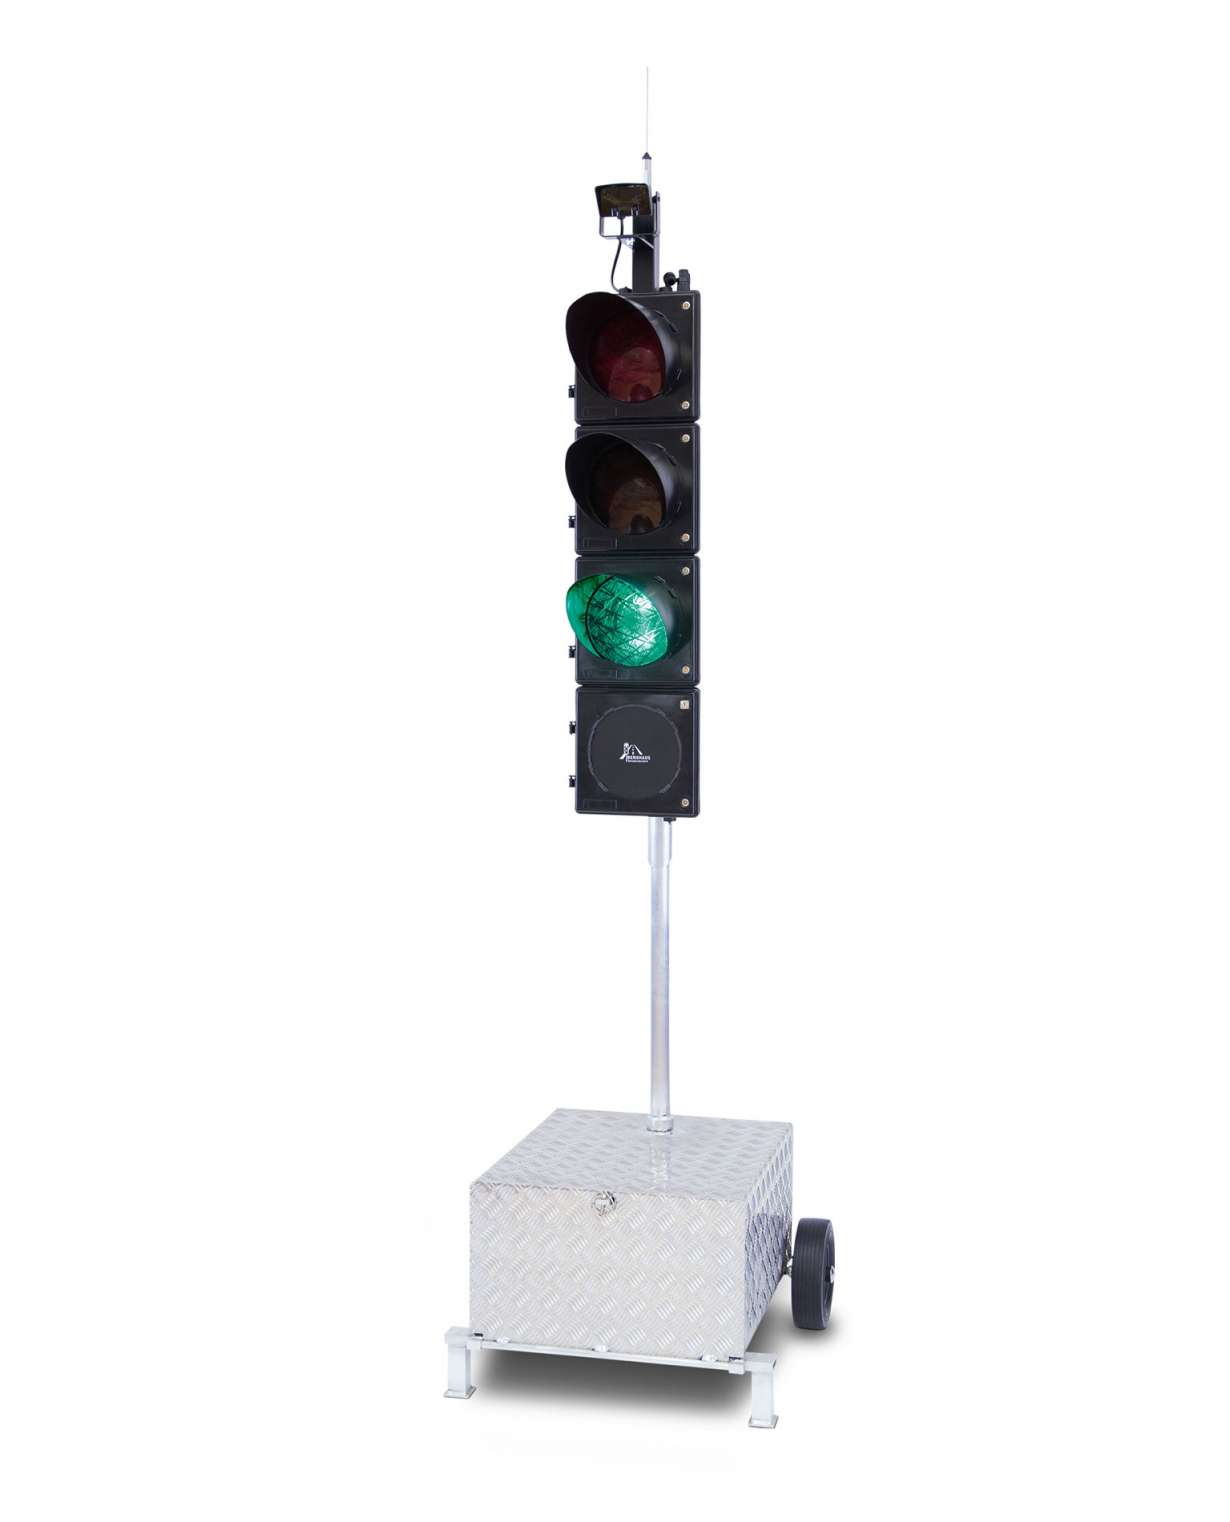 MPB4400 LED liikennevalojärjestelmä, radio-ohjaus, tutka-aktivointi